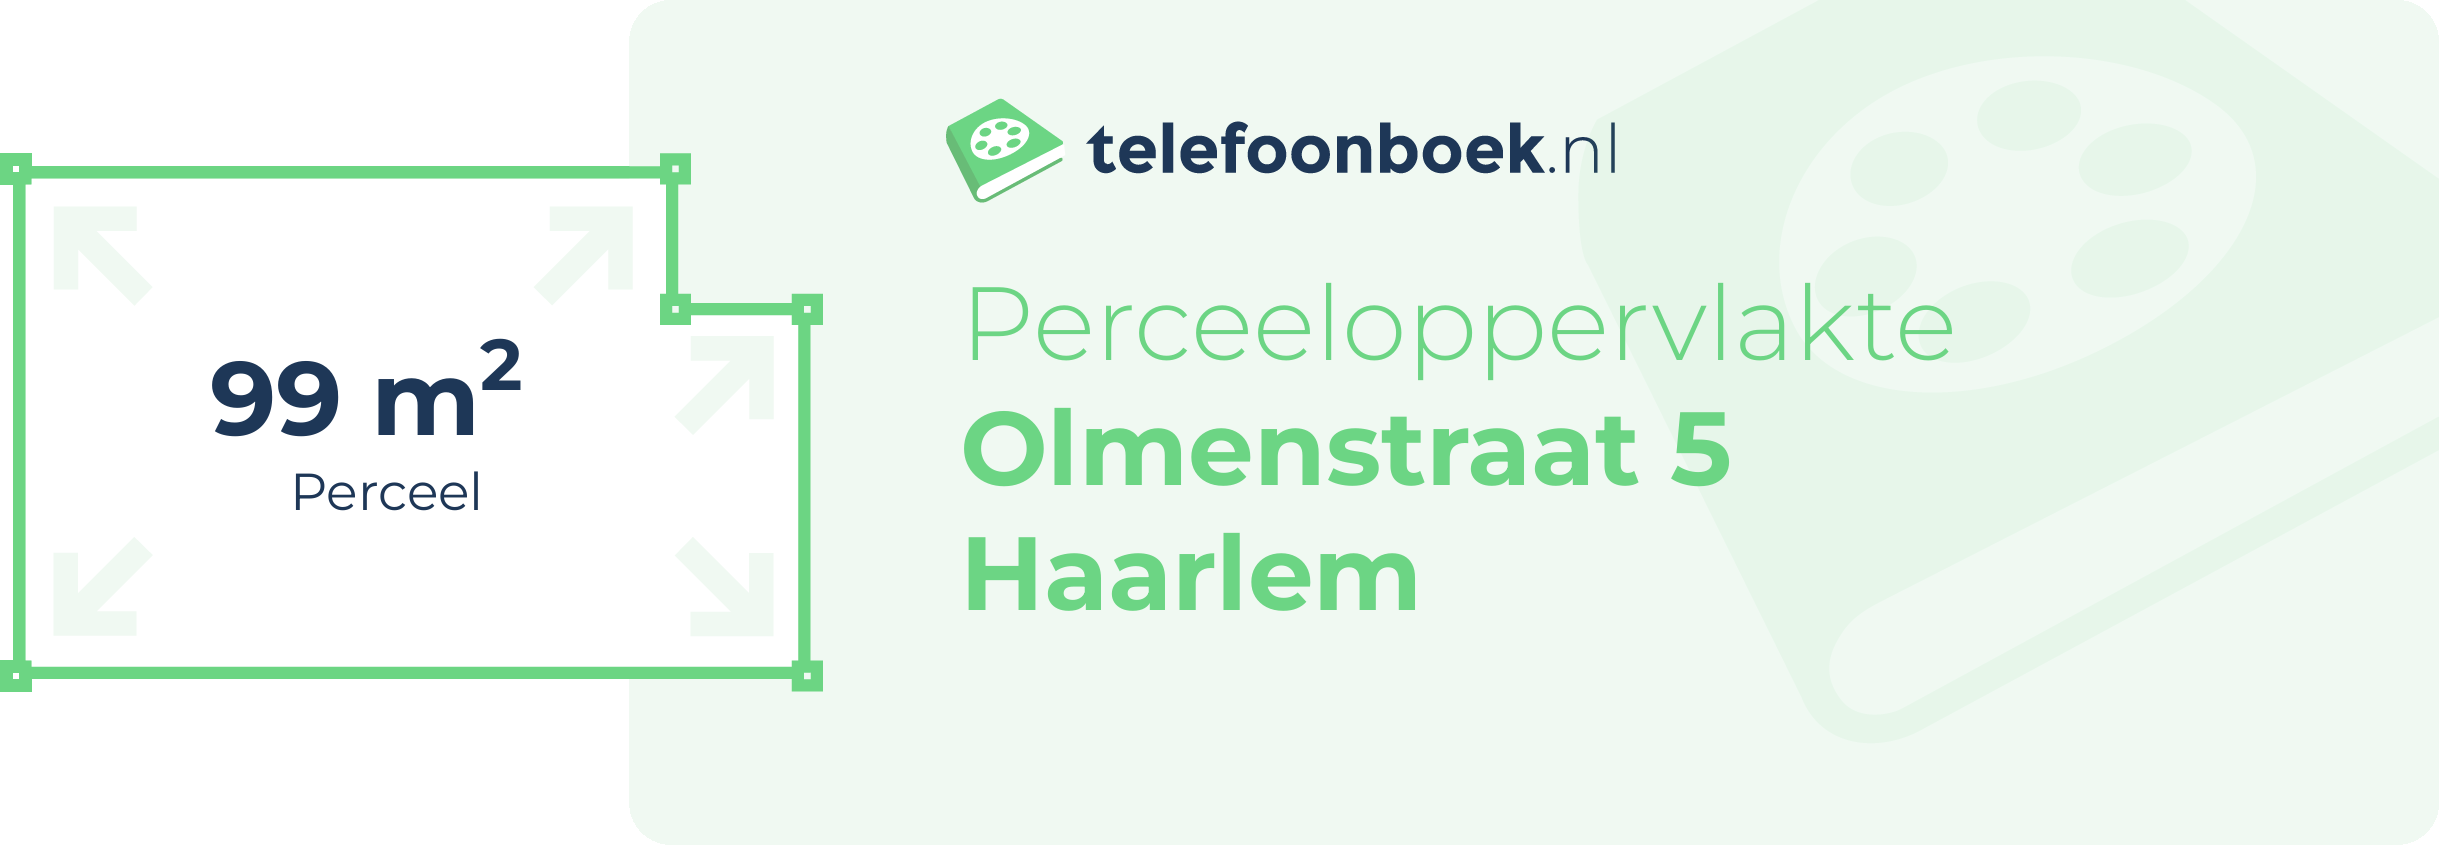 Perceeloppervlakte Olmenstraat 5 Haarlem